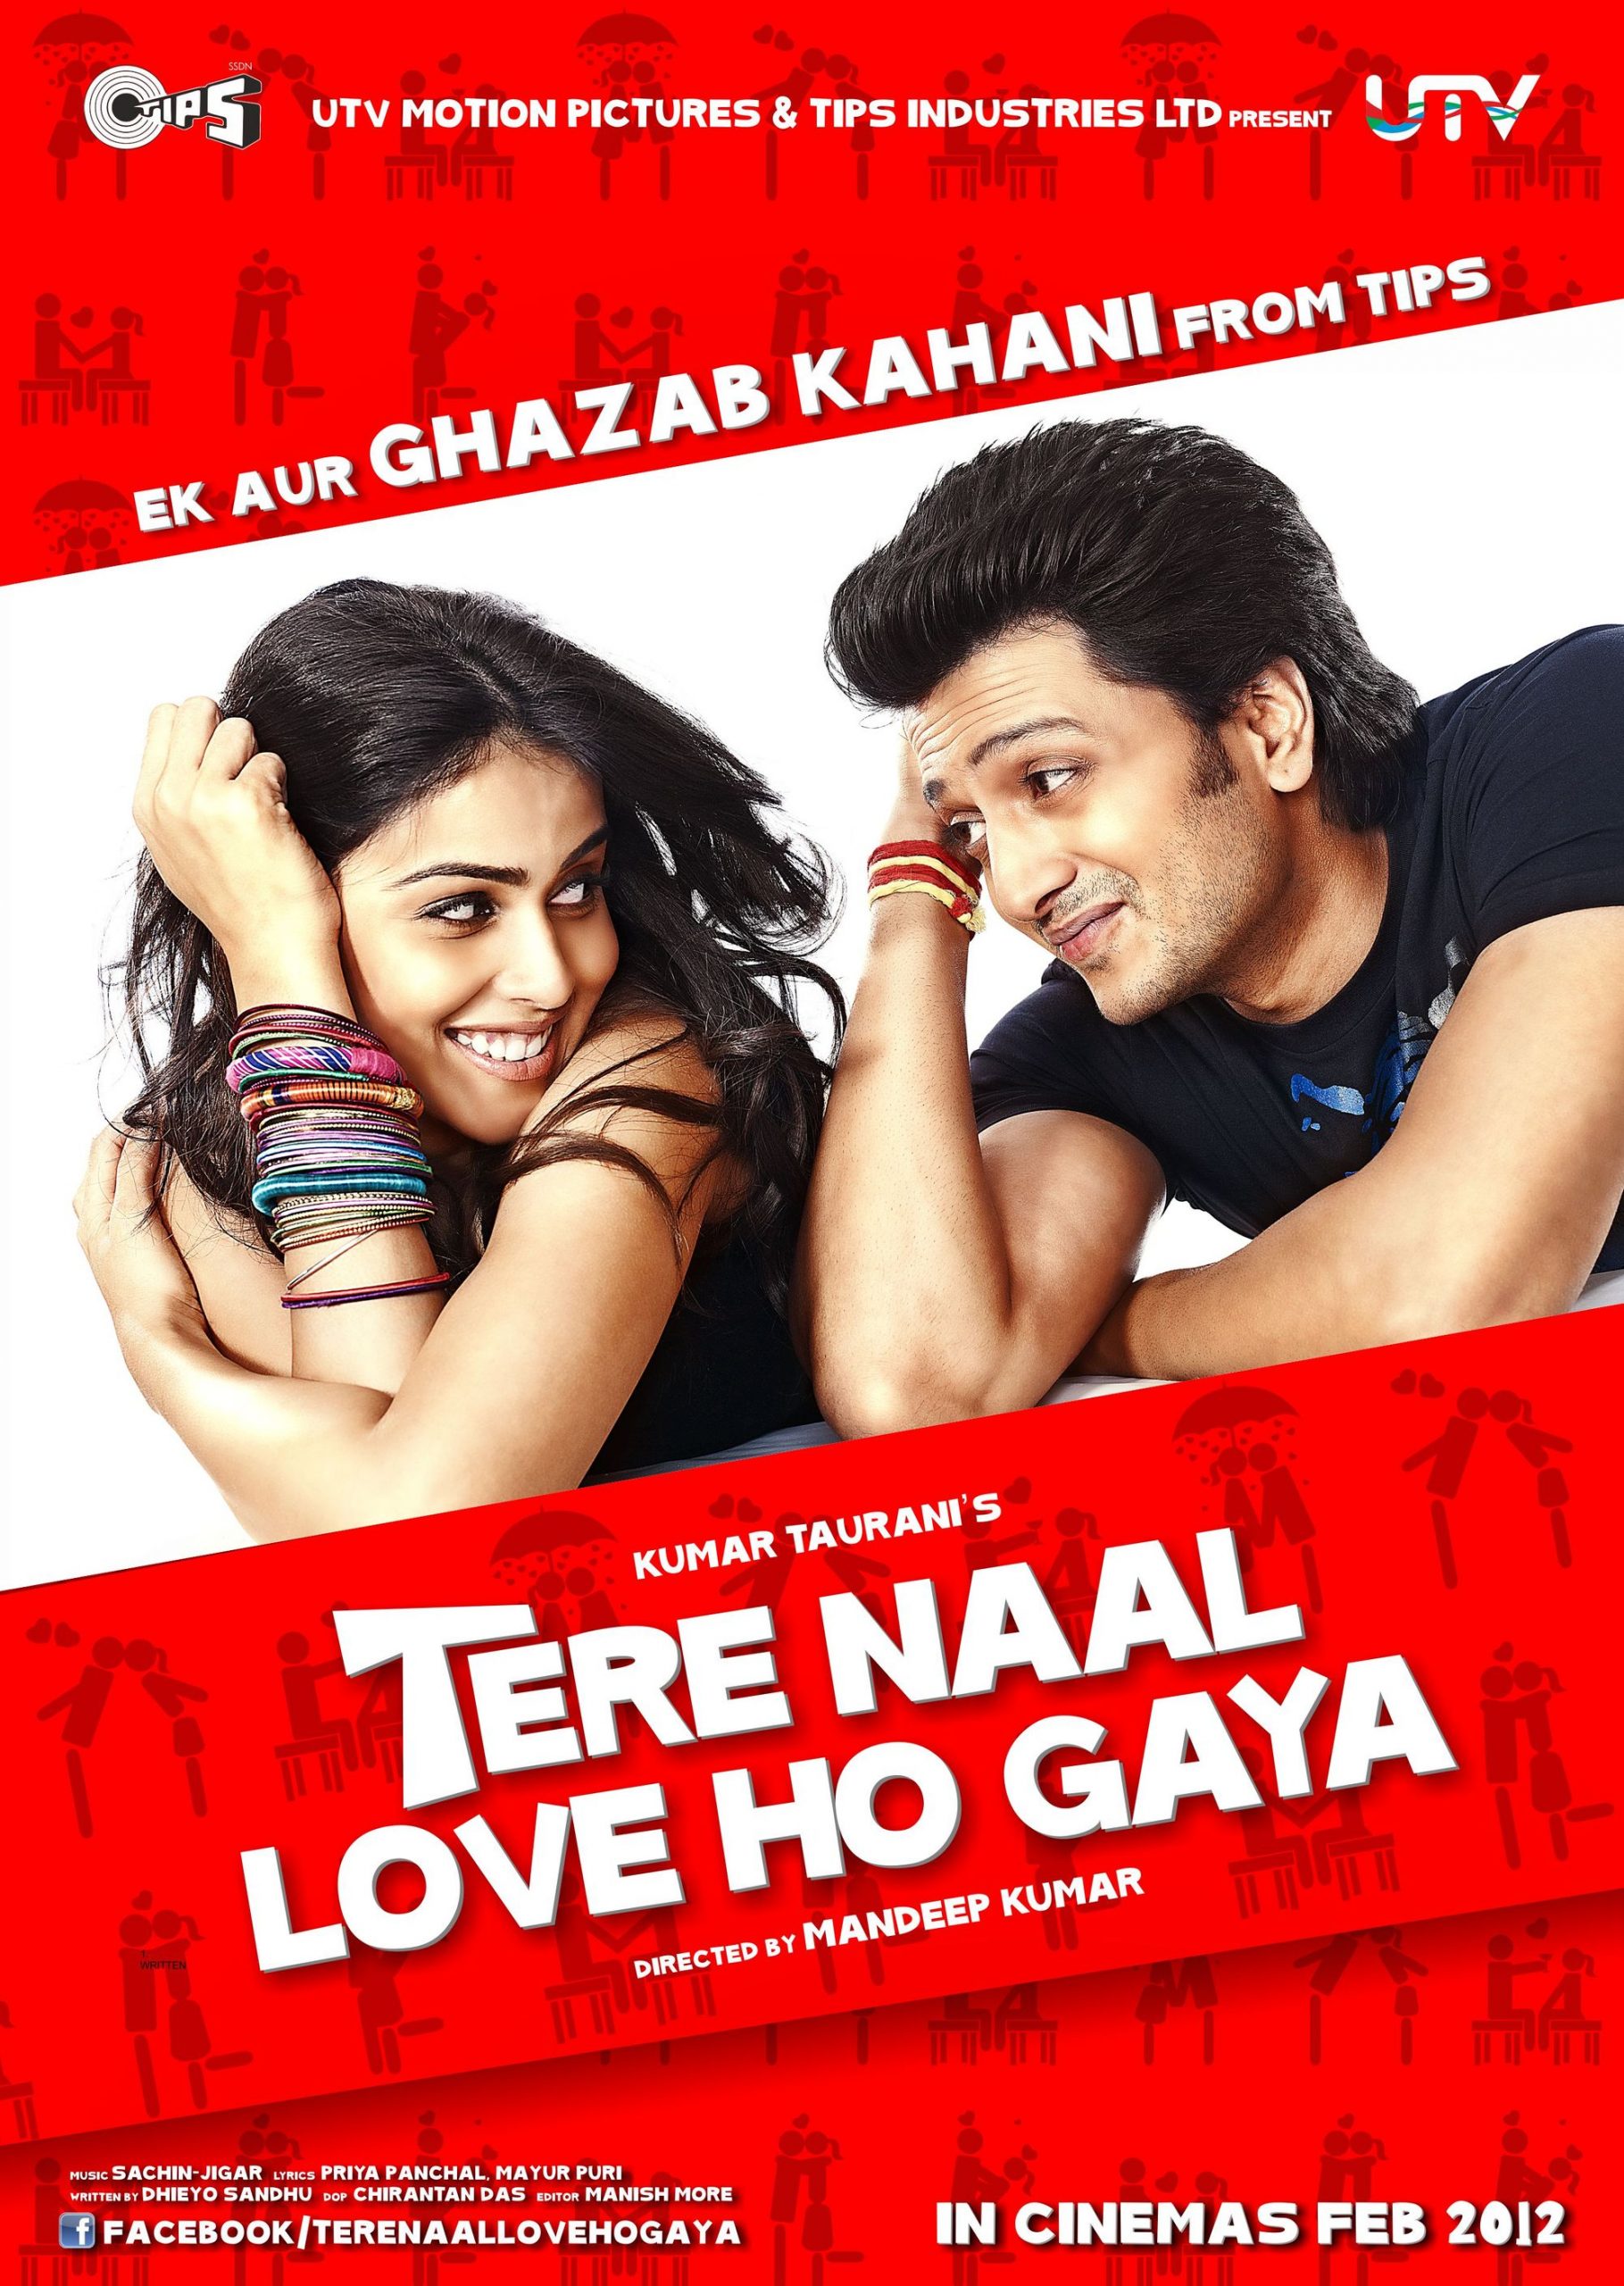 Riteish Deshmukh & Genelia D’Souza’s ‘Tere Naal Love Ho Gaya’!